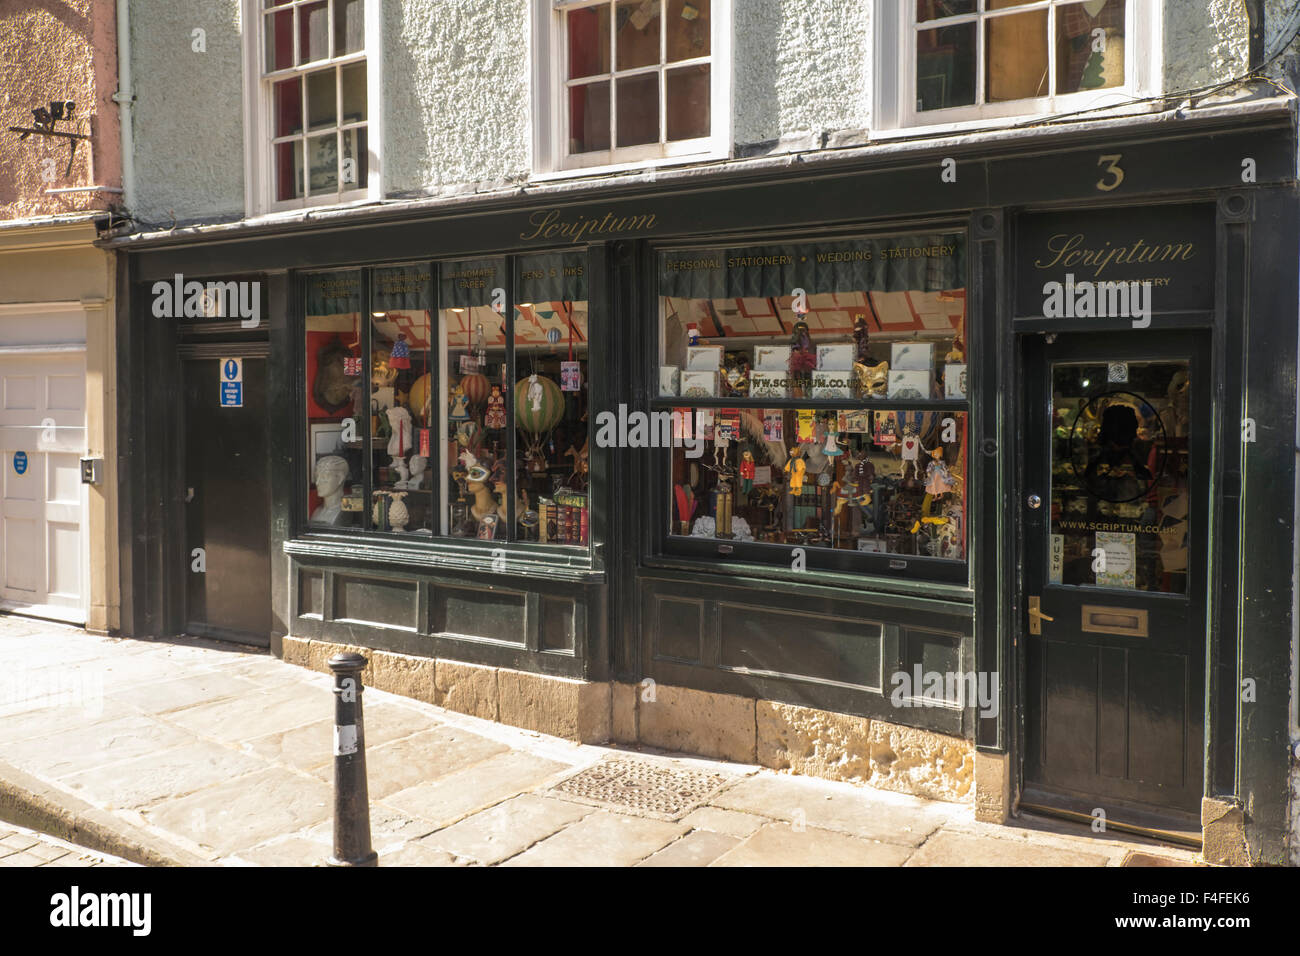 A visit to the historic University City of Oxford Oxfordshire England UK Scriptum Stationery Shop Stock Photo